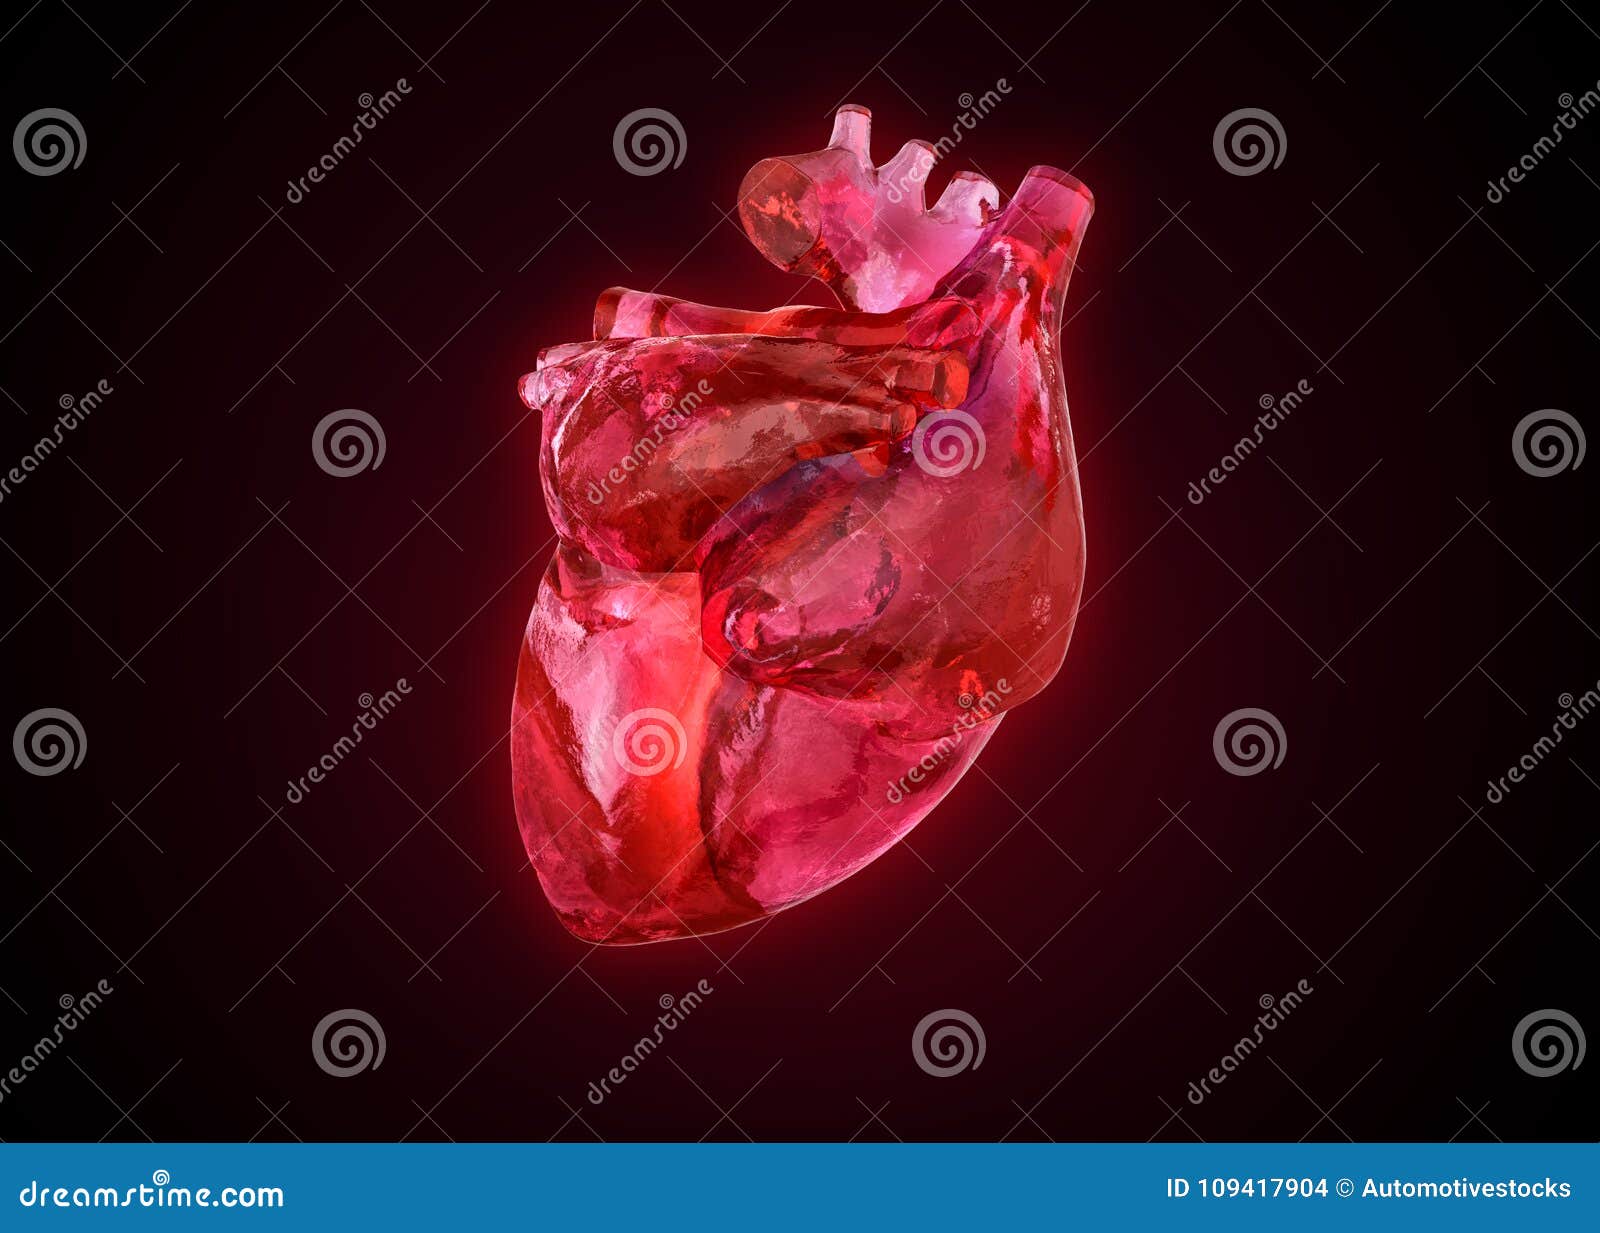 anatomical human heart as gemstone,